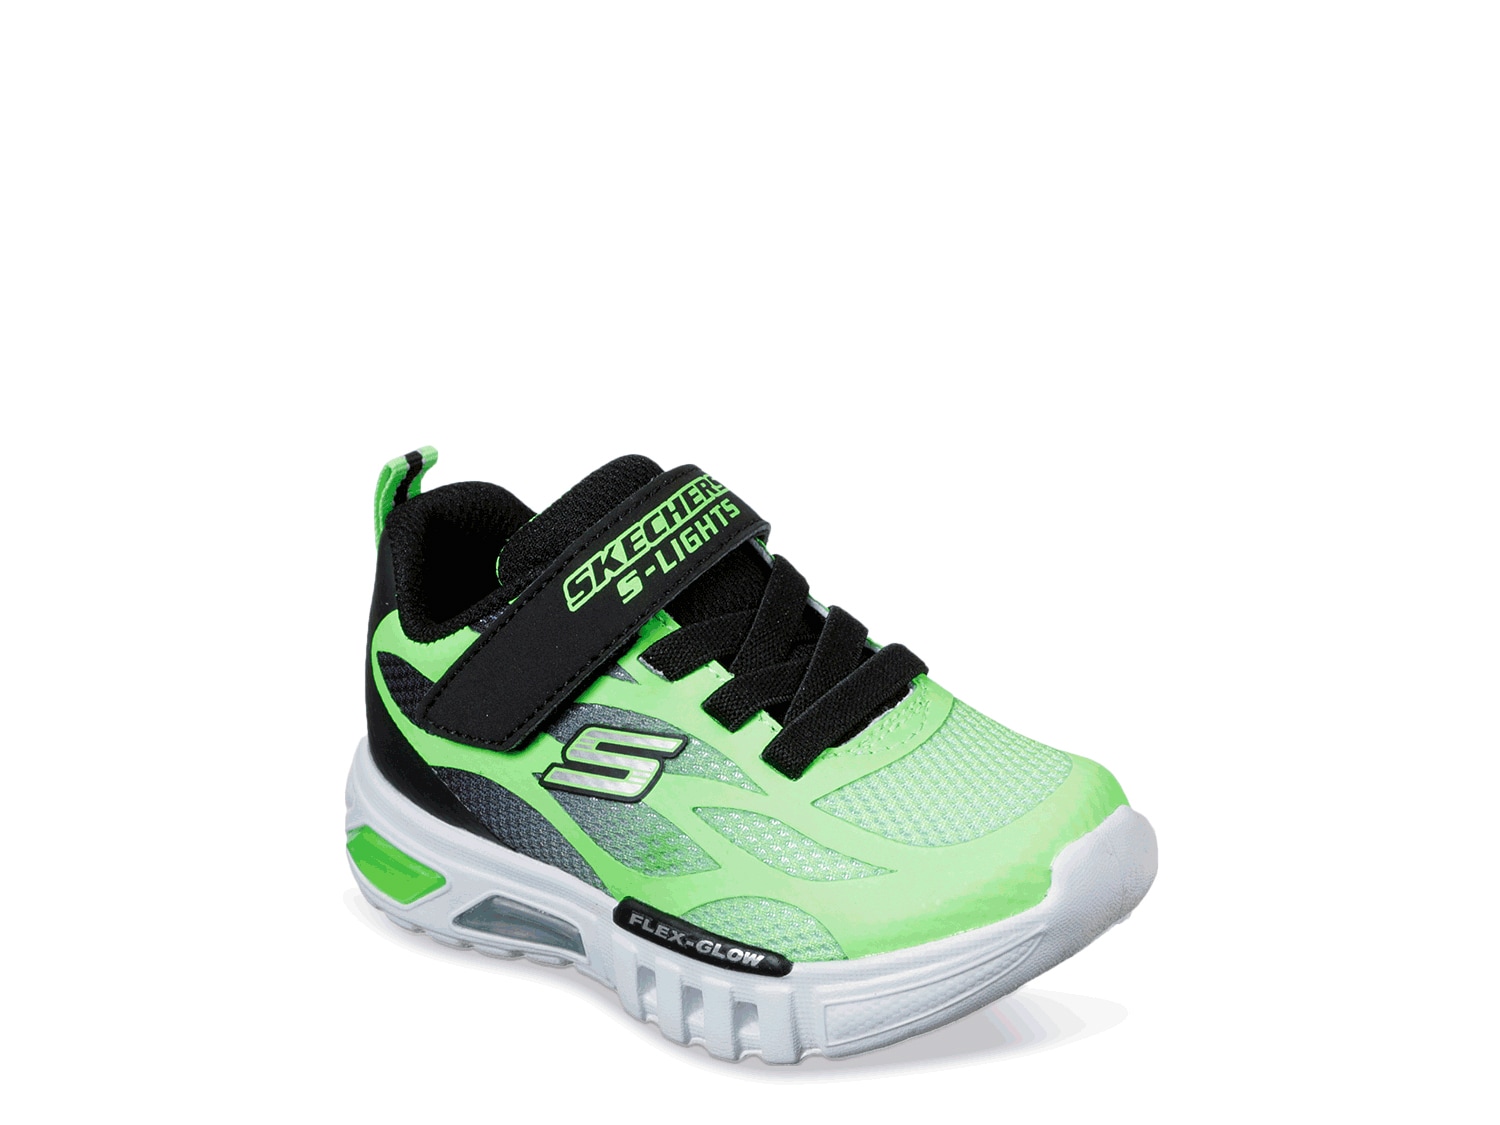 green sneakers kids